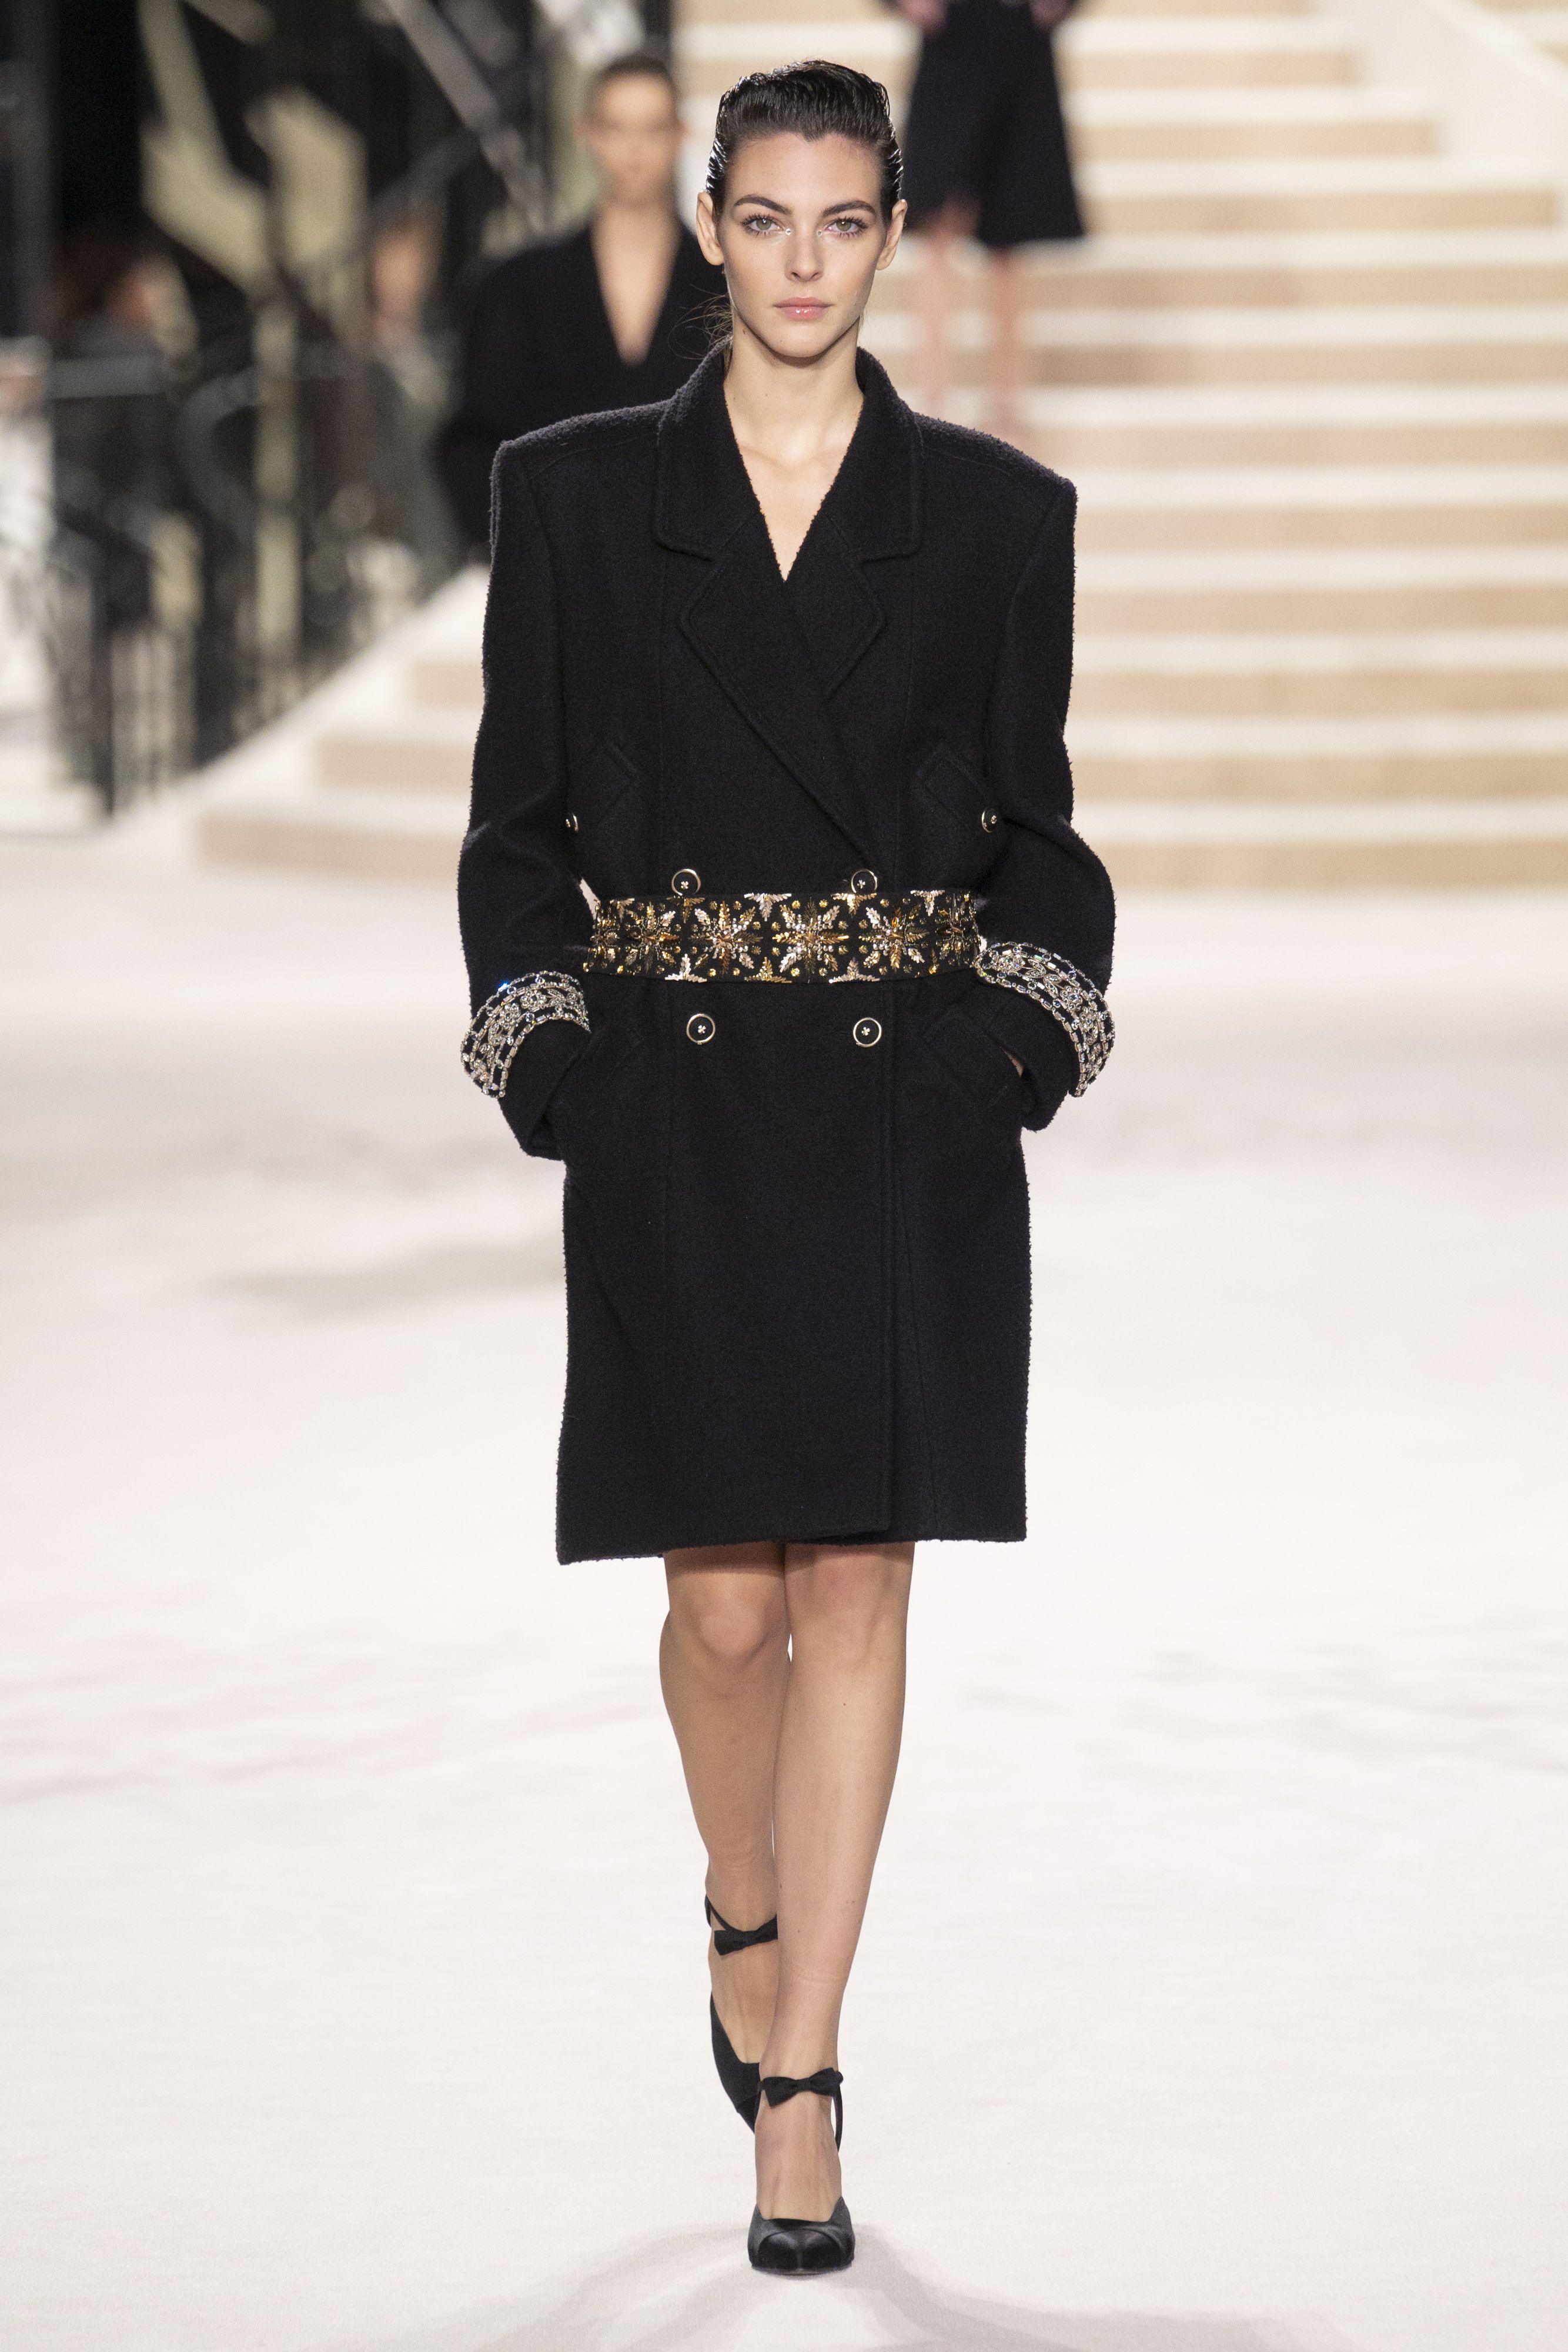 Kristen Stewart Was the Only Guest at Chanel's Métiers D'Art 2020/21 Show